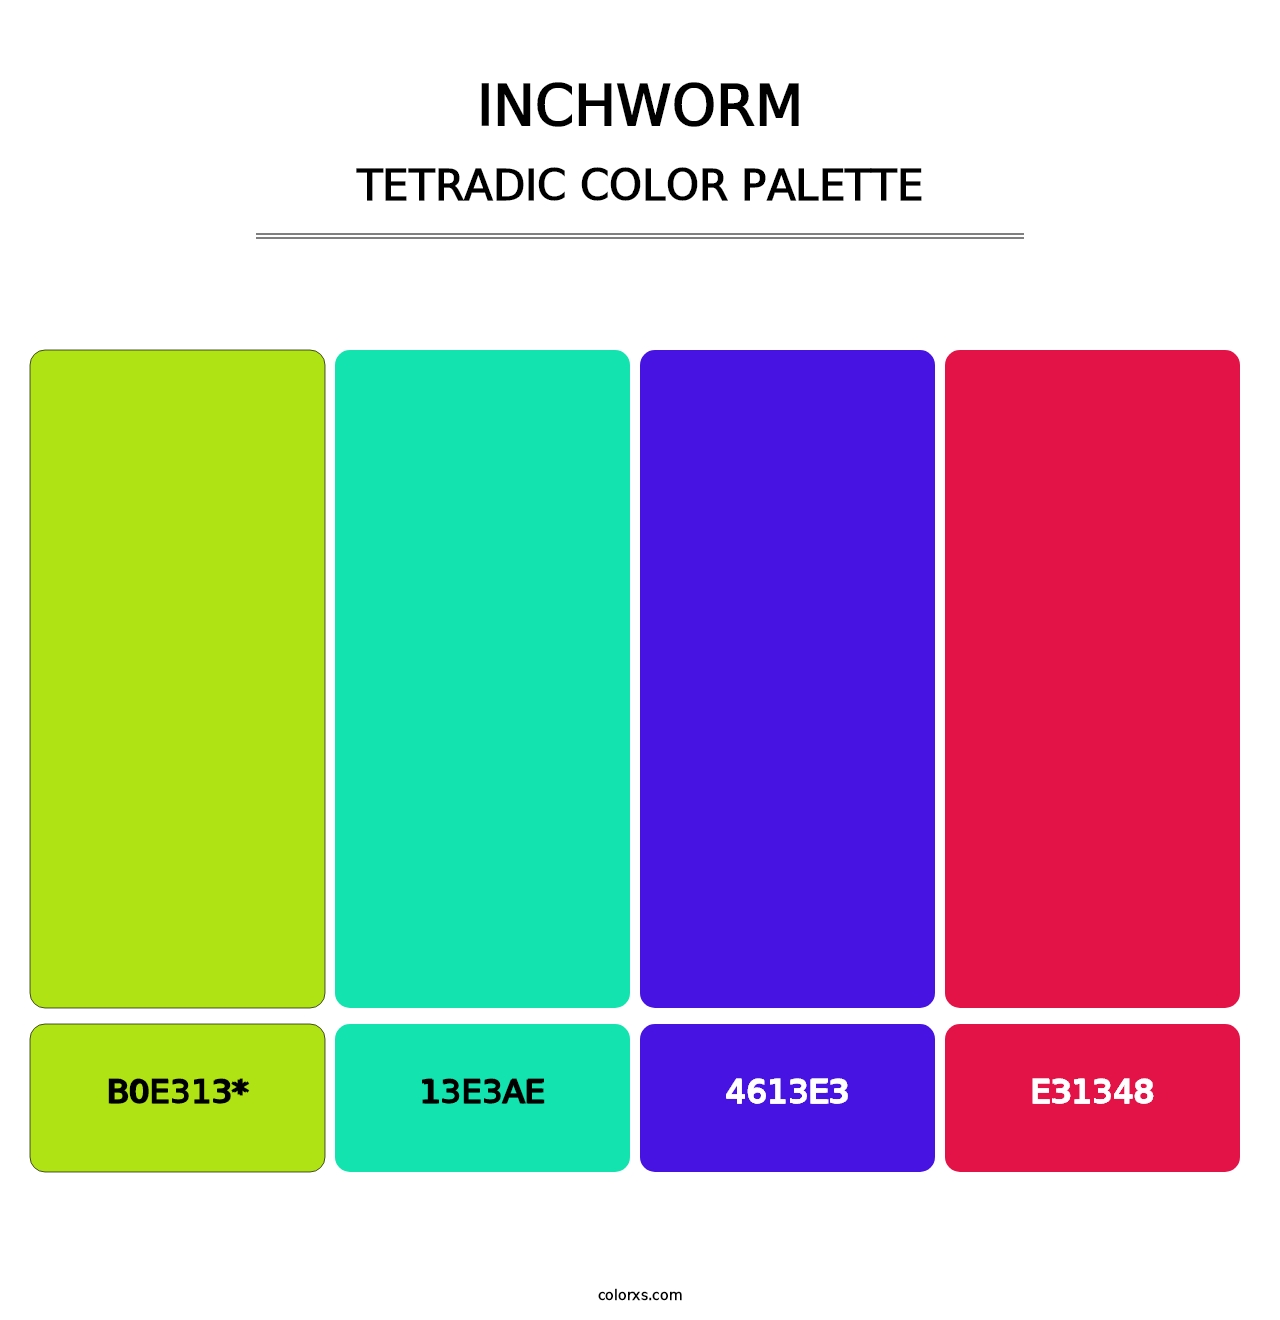 Inchworm - Tetradic Color Palette